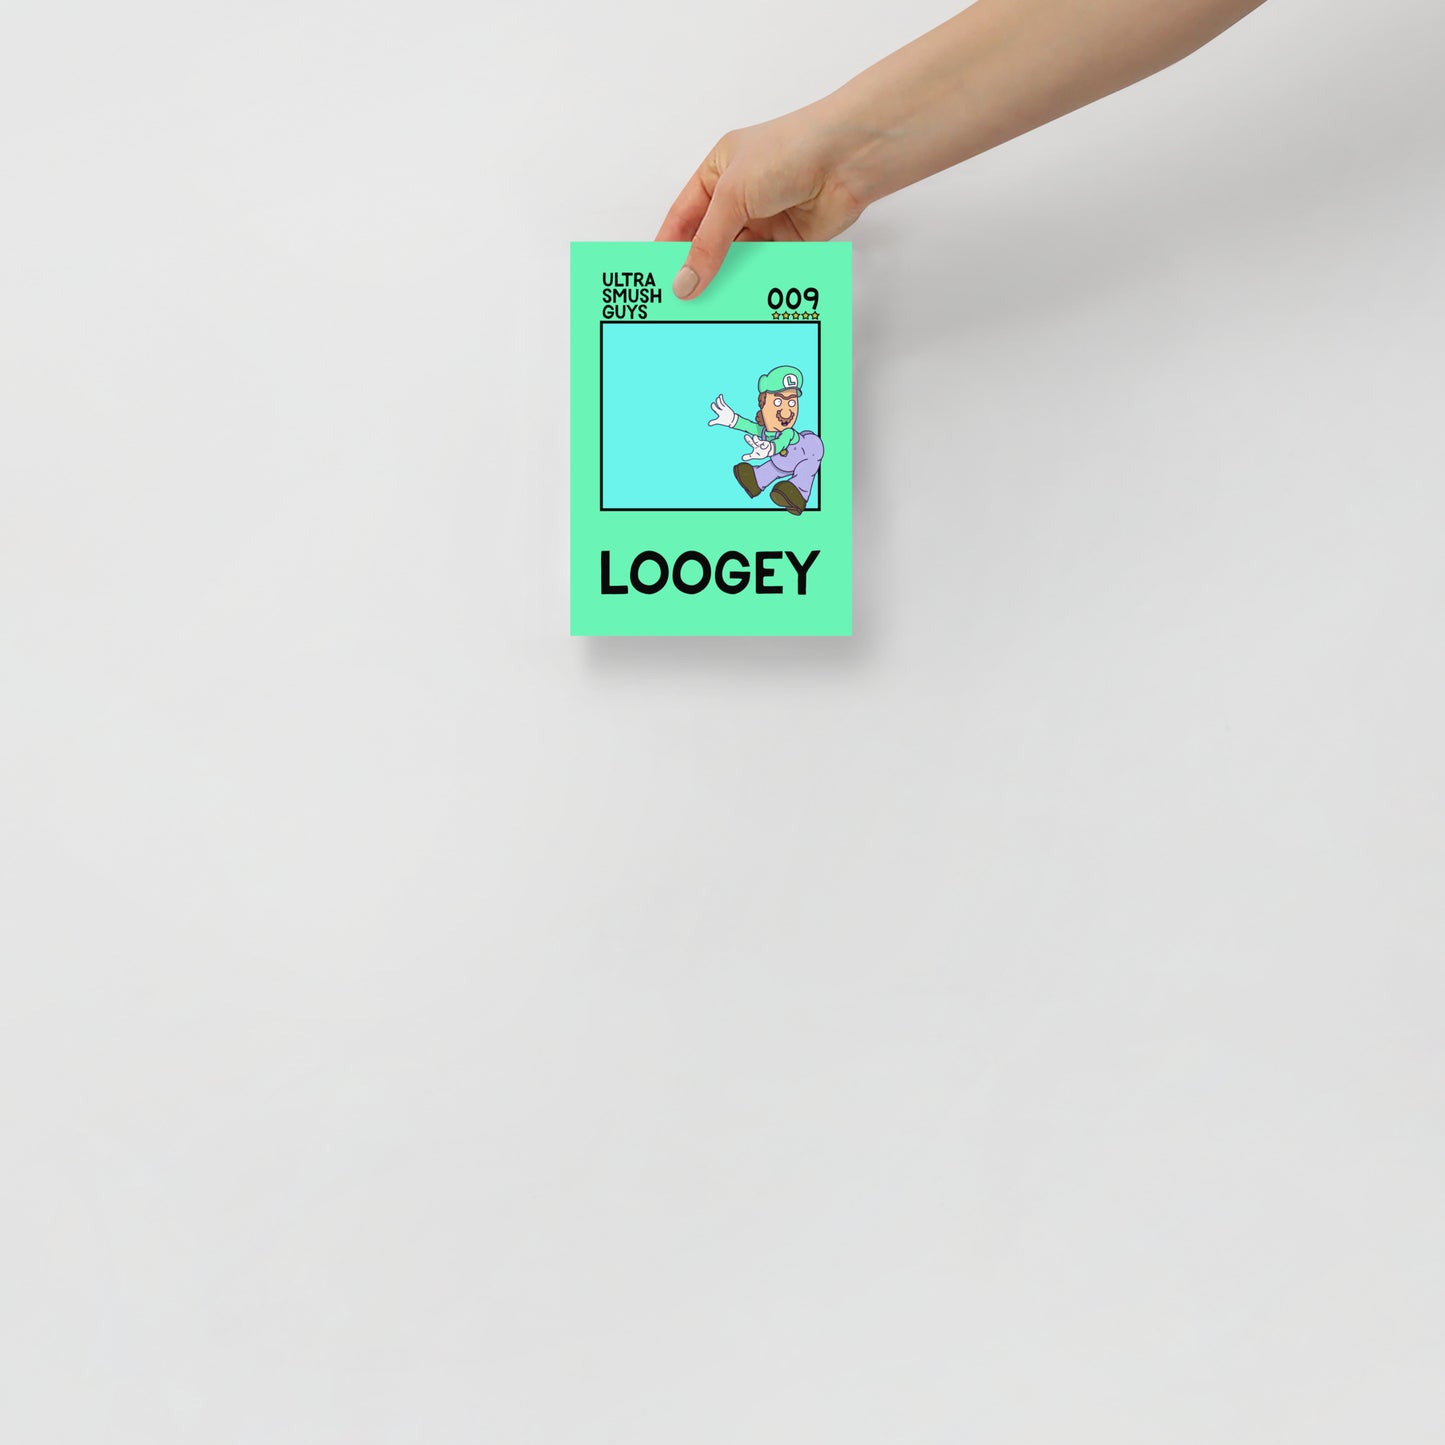 009: Loogey - Mini Poster - 5 in. x 7 in. - Ultra Smush Guys